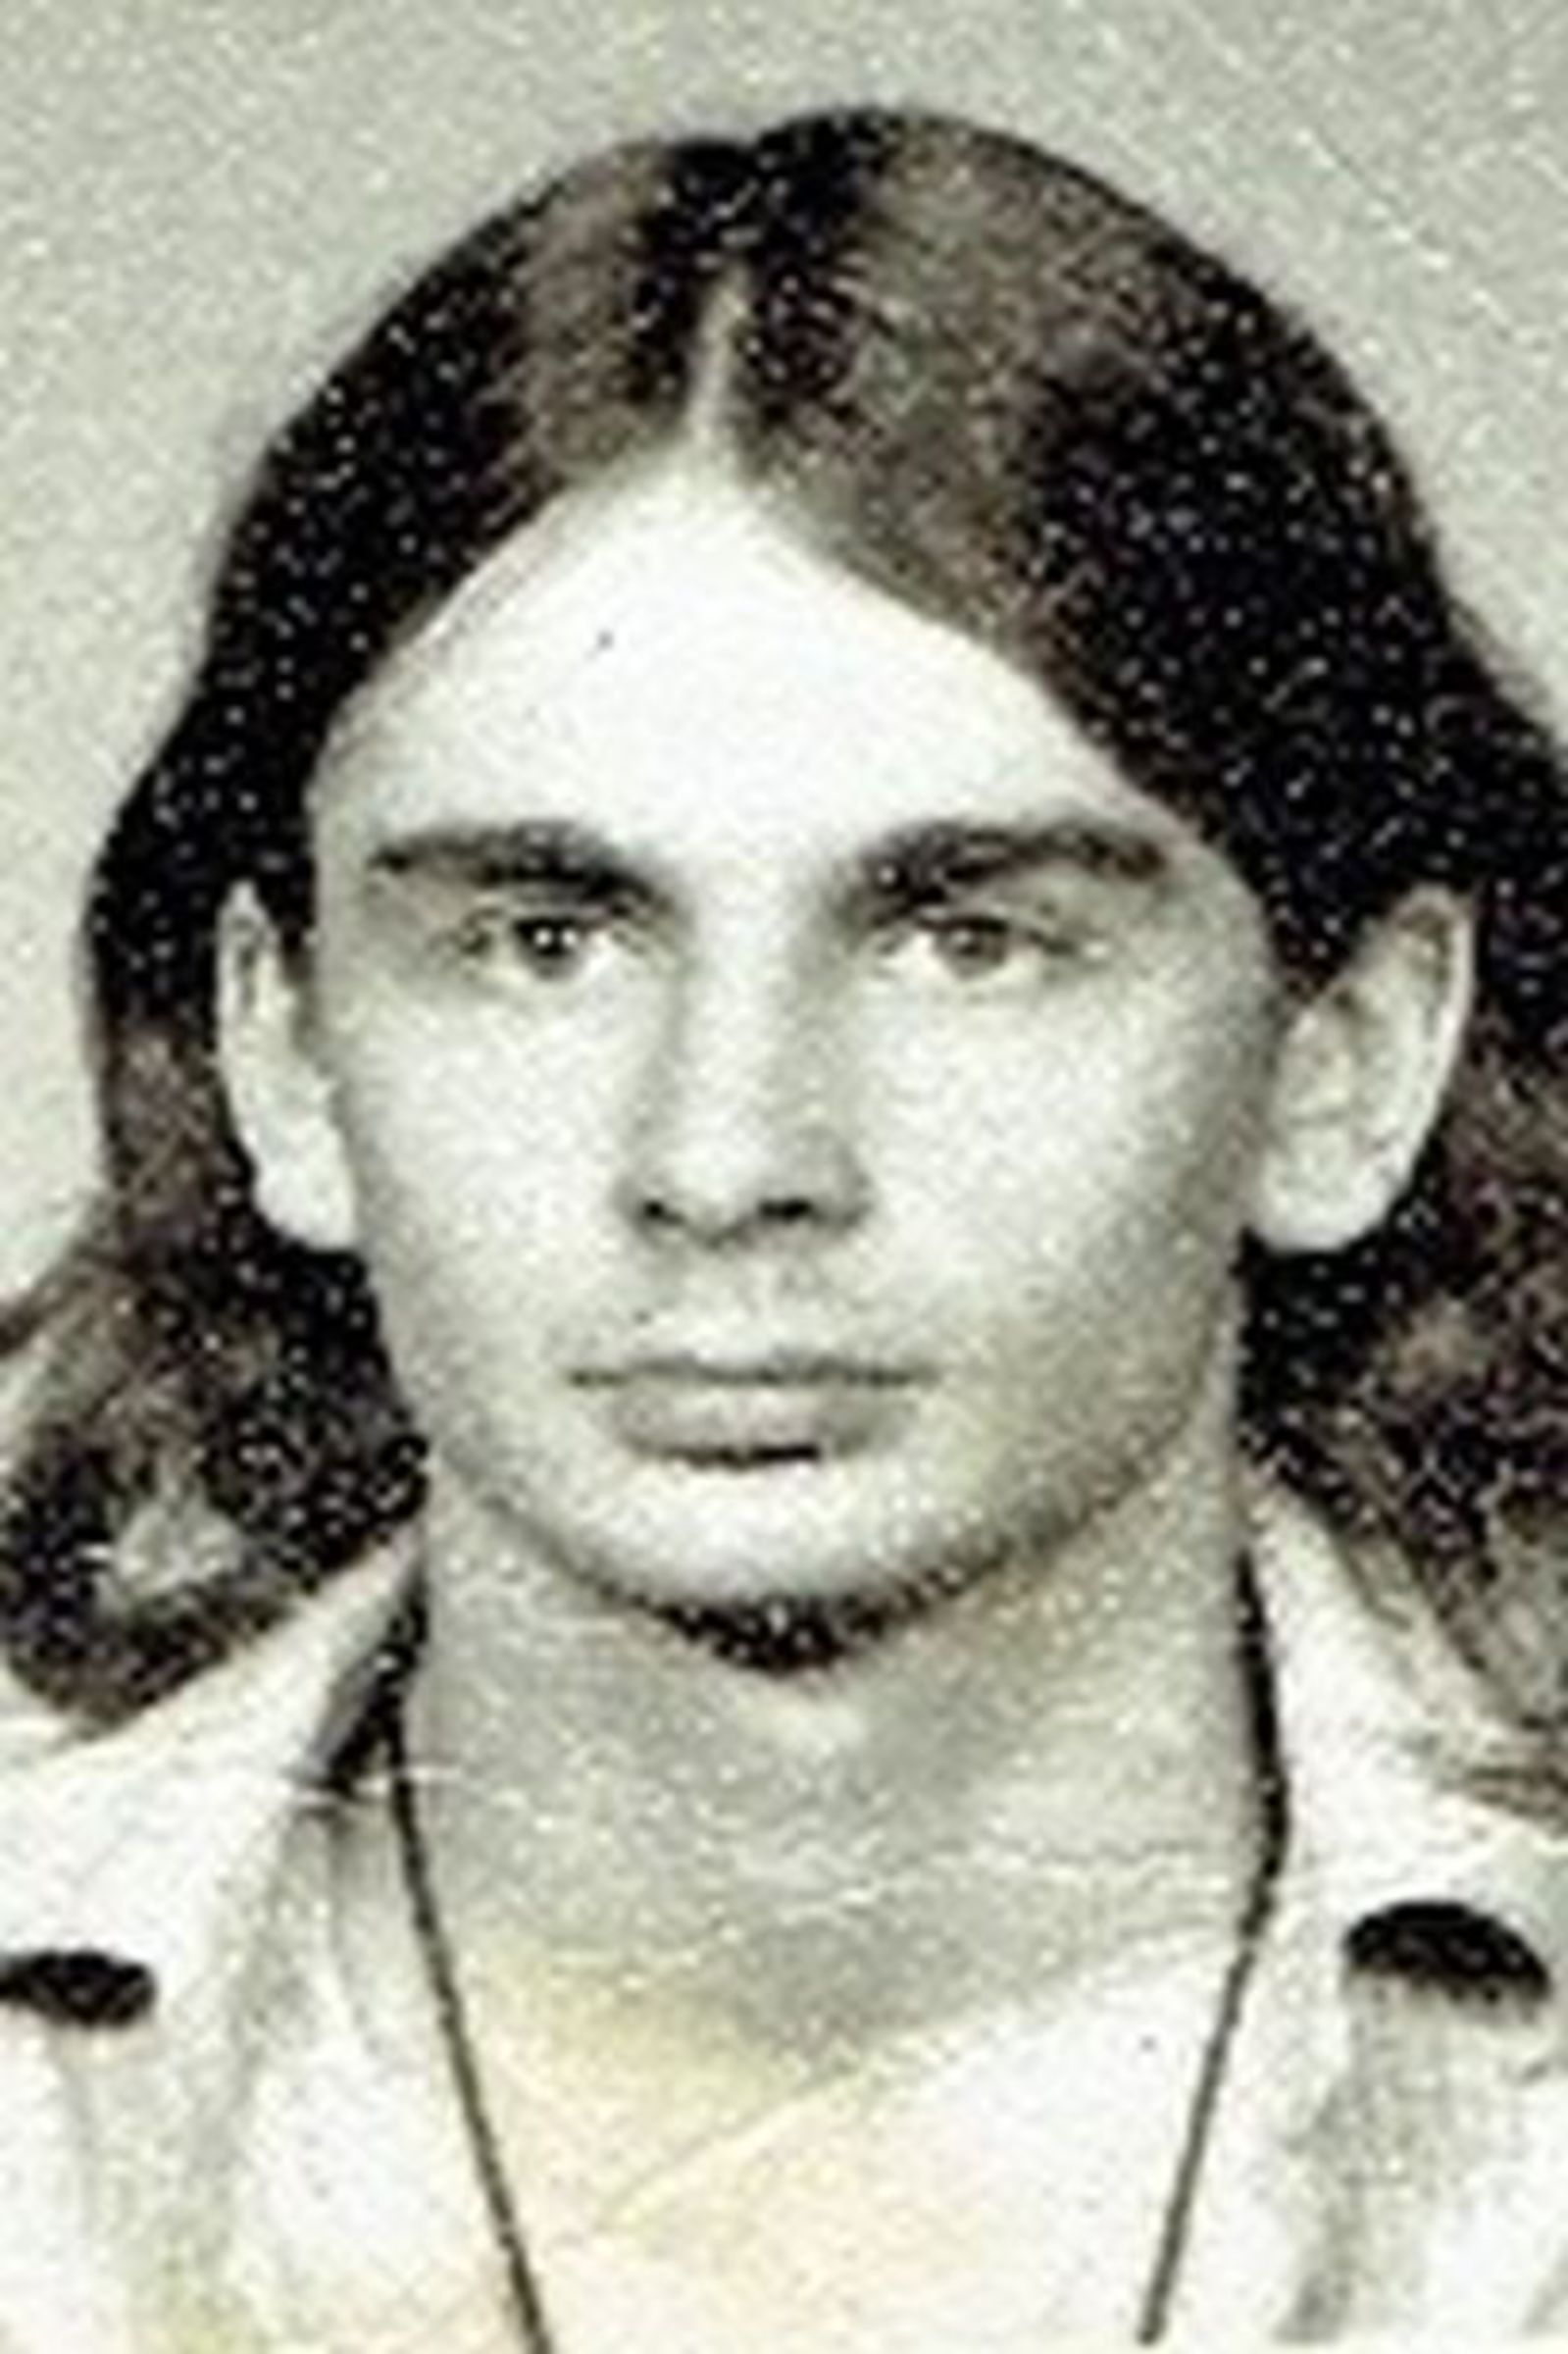 Martin Hassa / kolem roku 1984